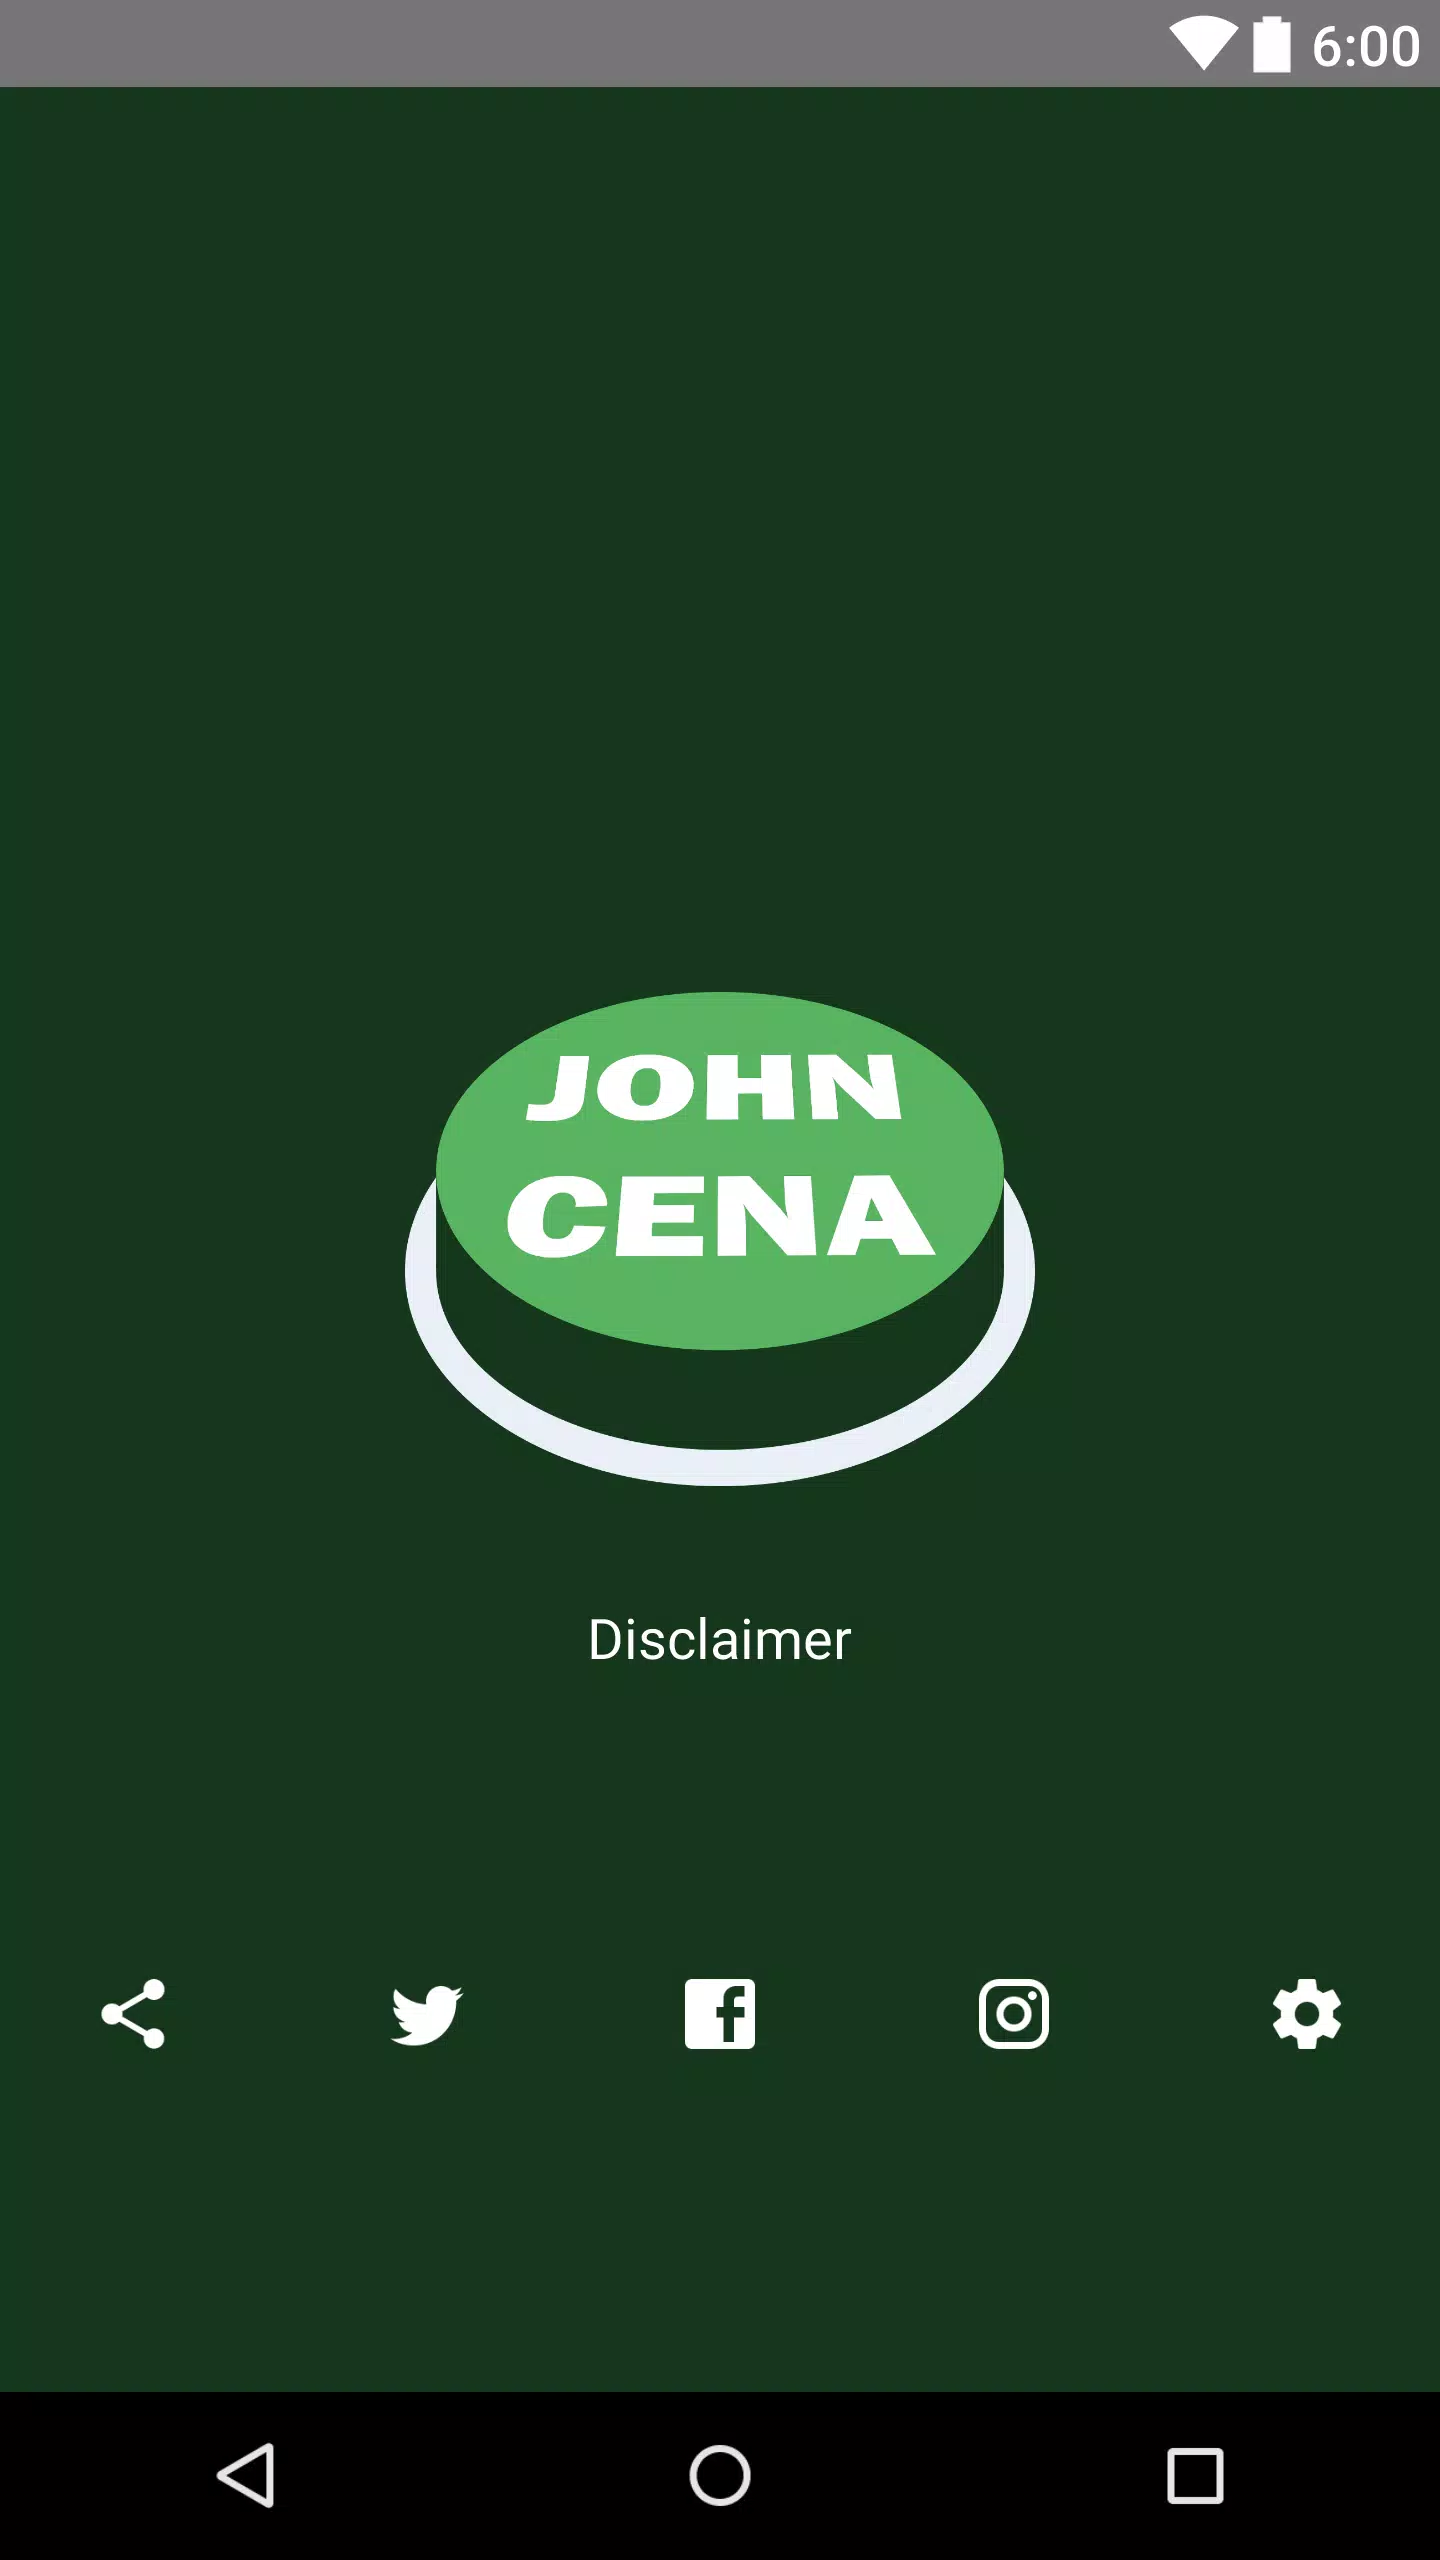 John Cena Prank Button Apk For Android Download